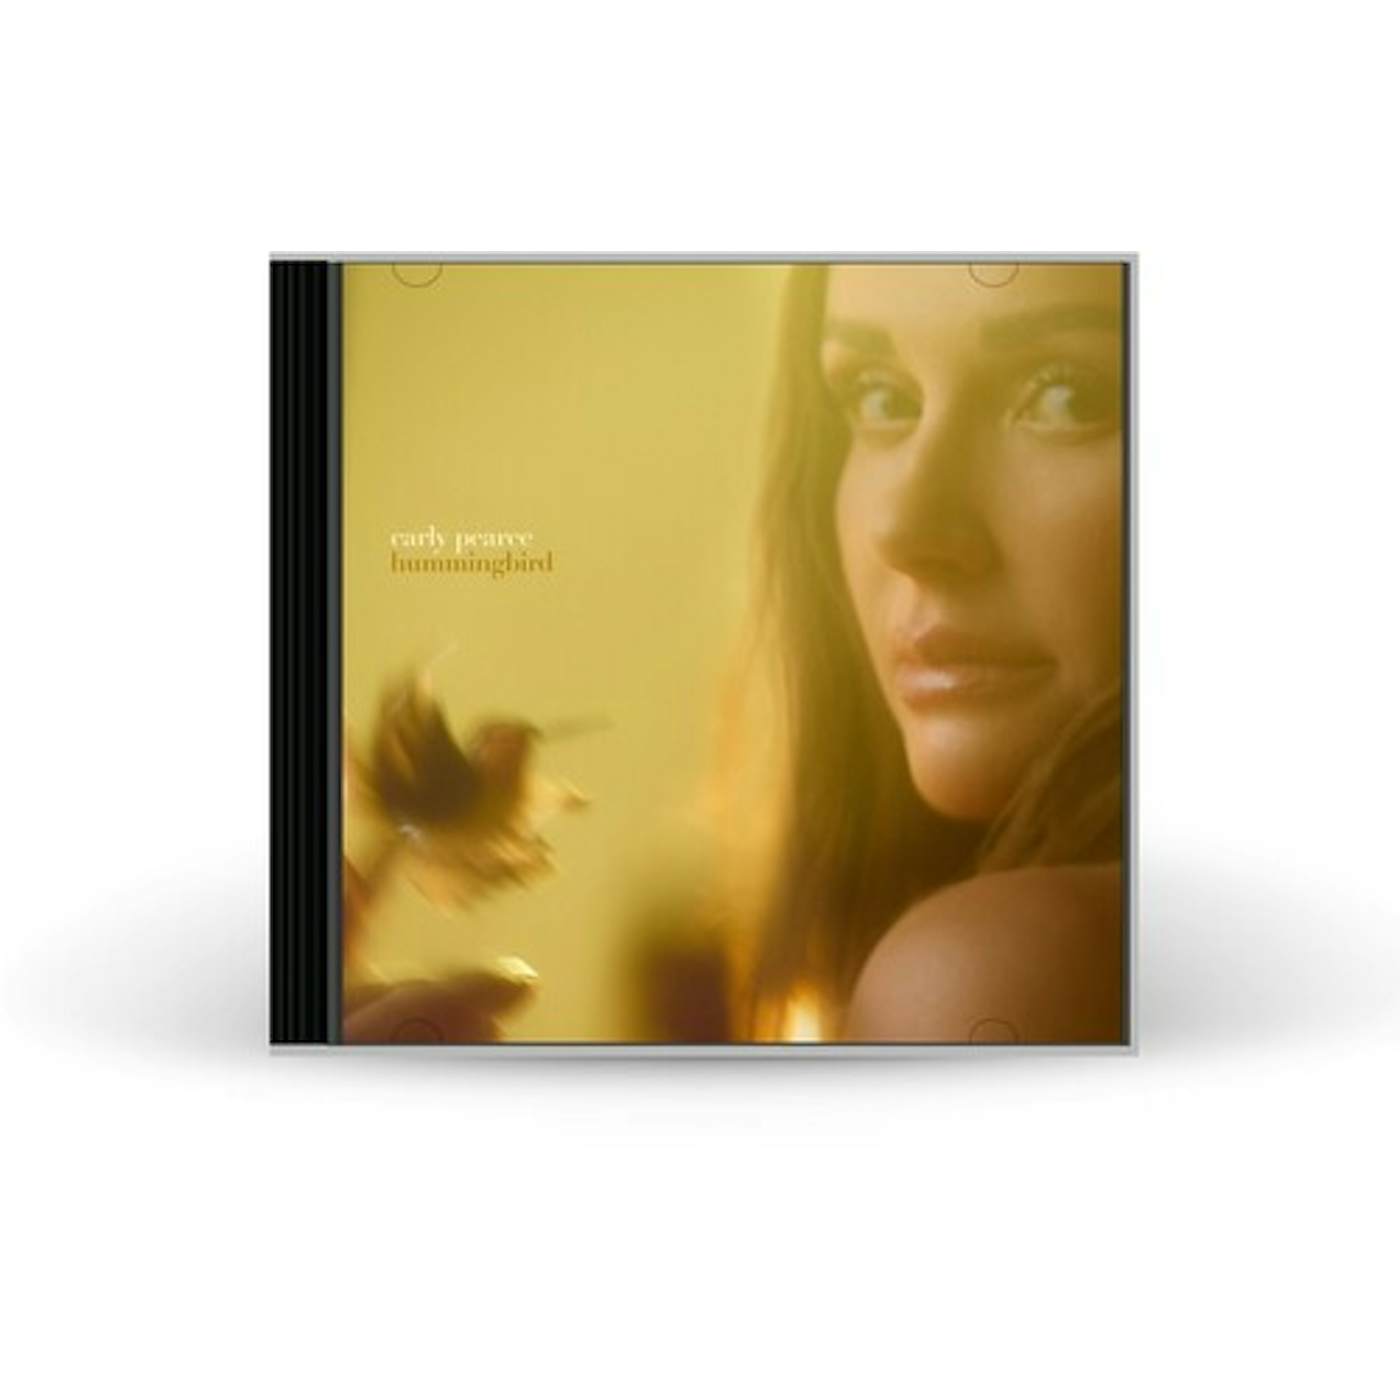 Carly Pearce HUMMINGBIRD CD